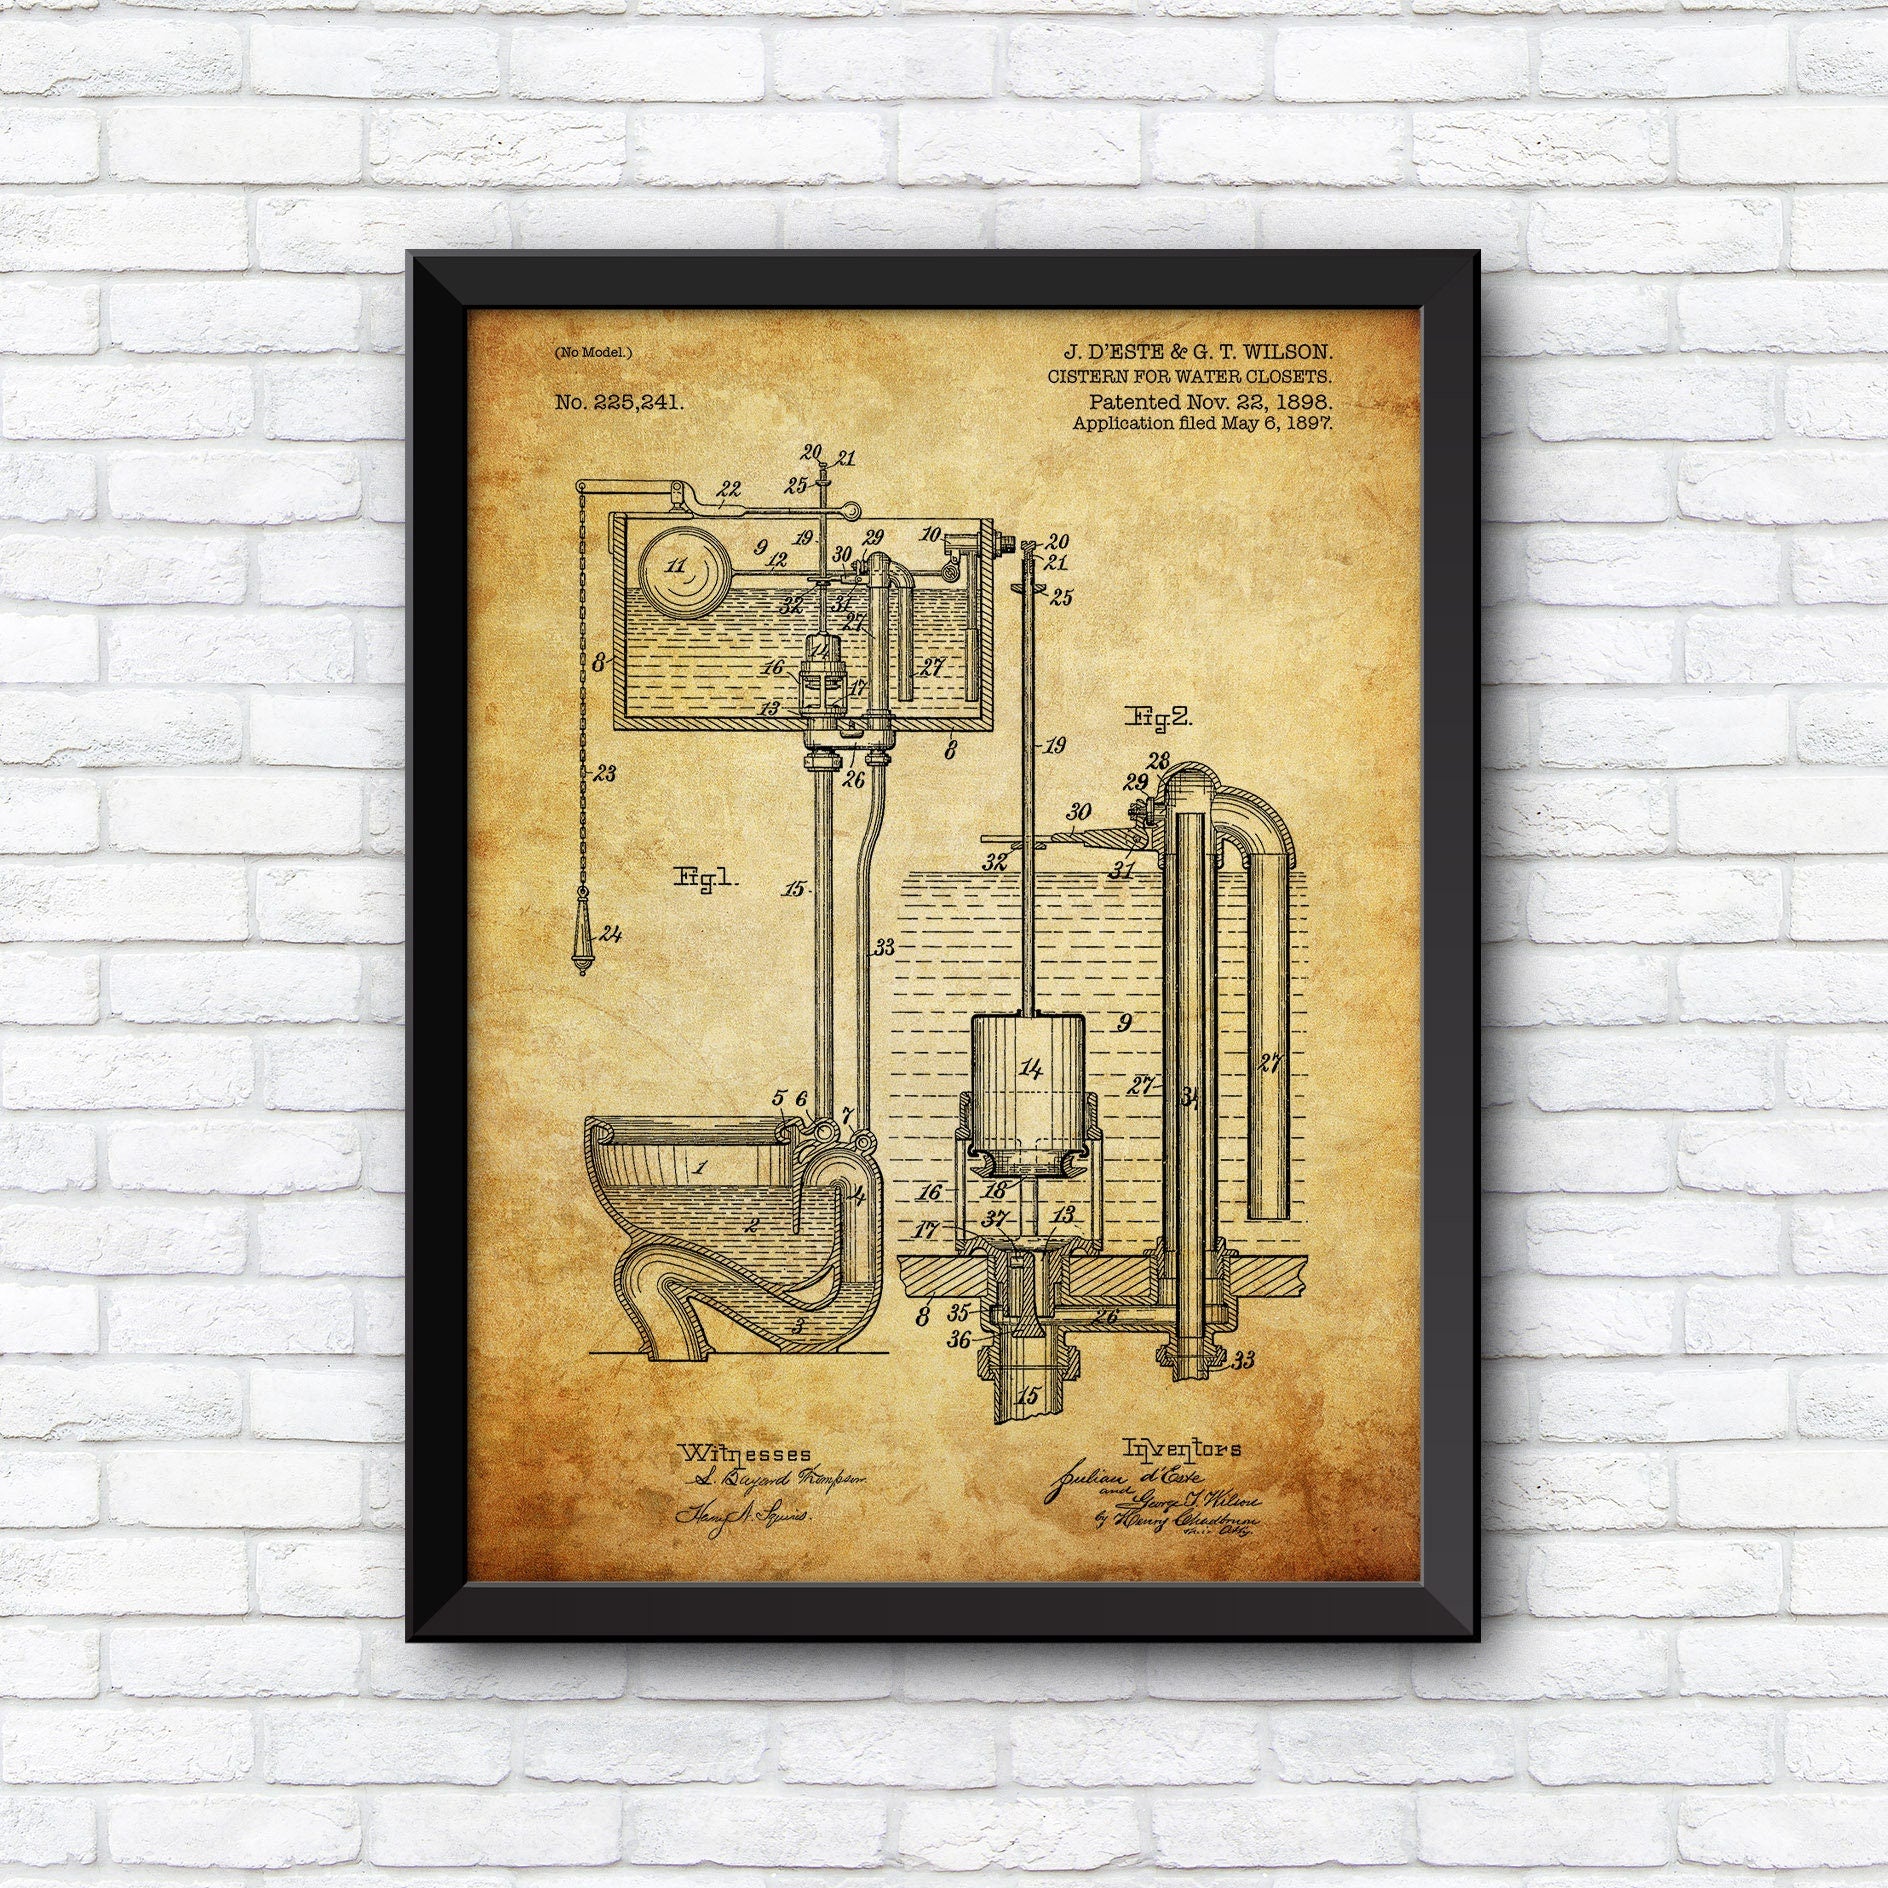 Bathroom Patent print, Cistern for Water Closets for Bathroom Patent print, Patent print, Patent print design, Vintage patent print